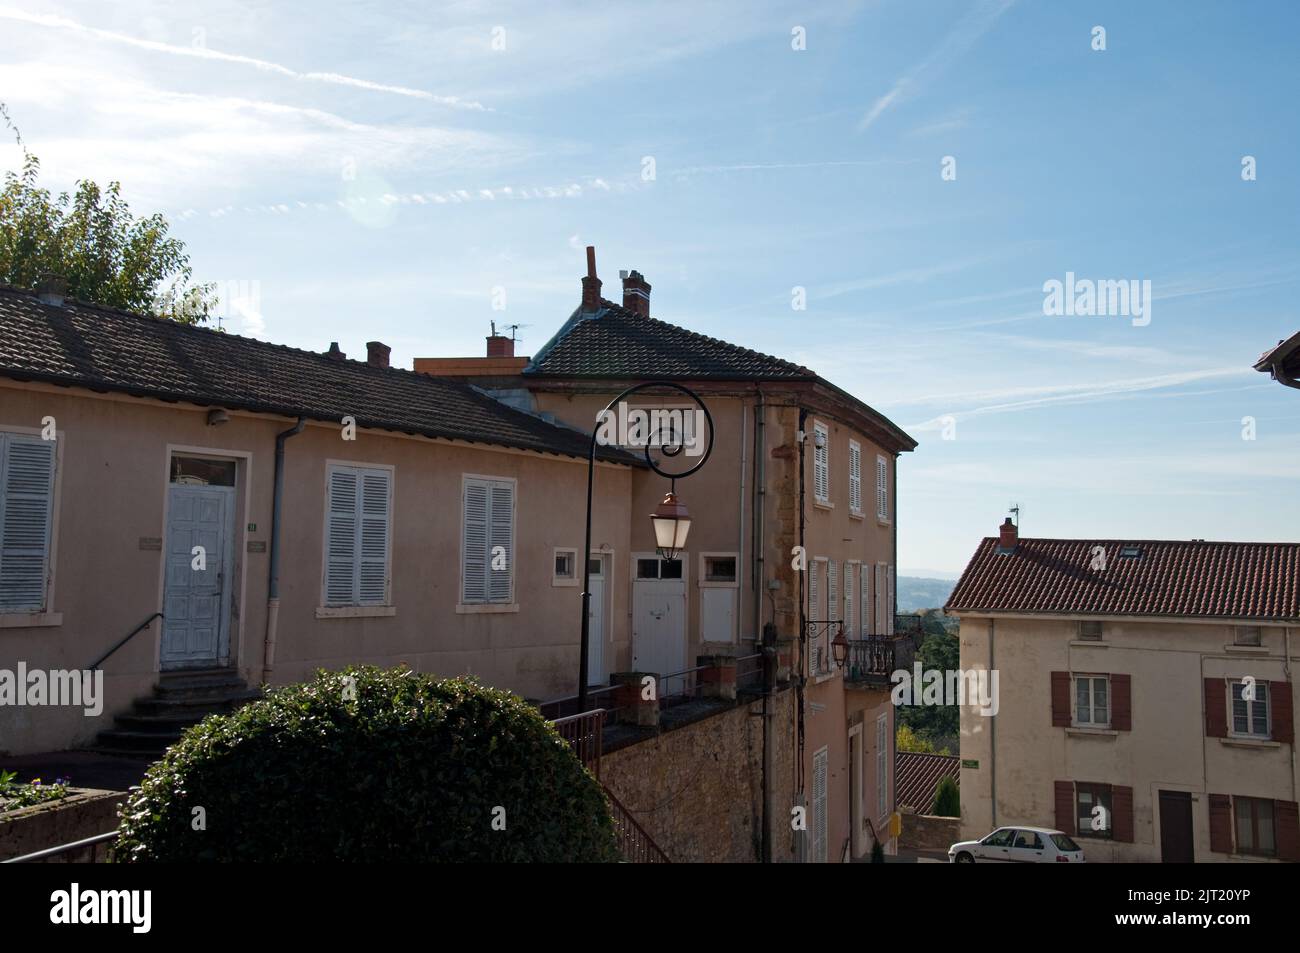 Street scene, St Cyr au Mont d'Or, Lyon, Auvergne-Rhone-Alpes, France Stock Photo